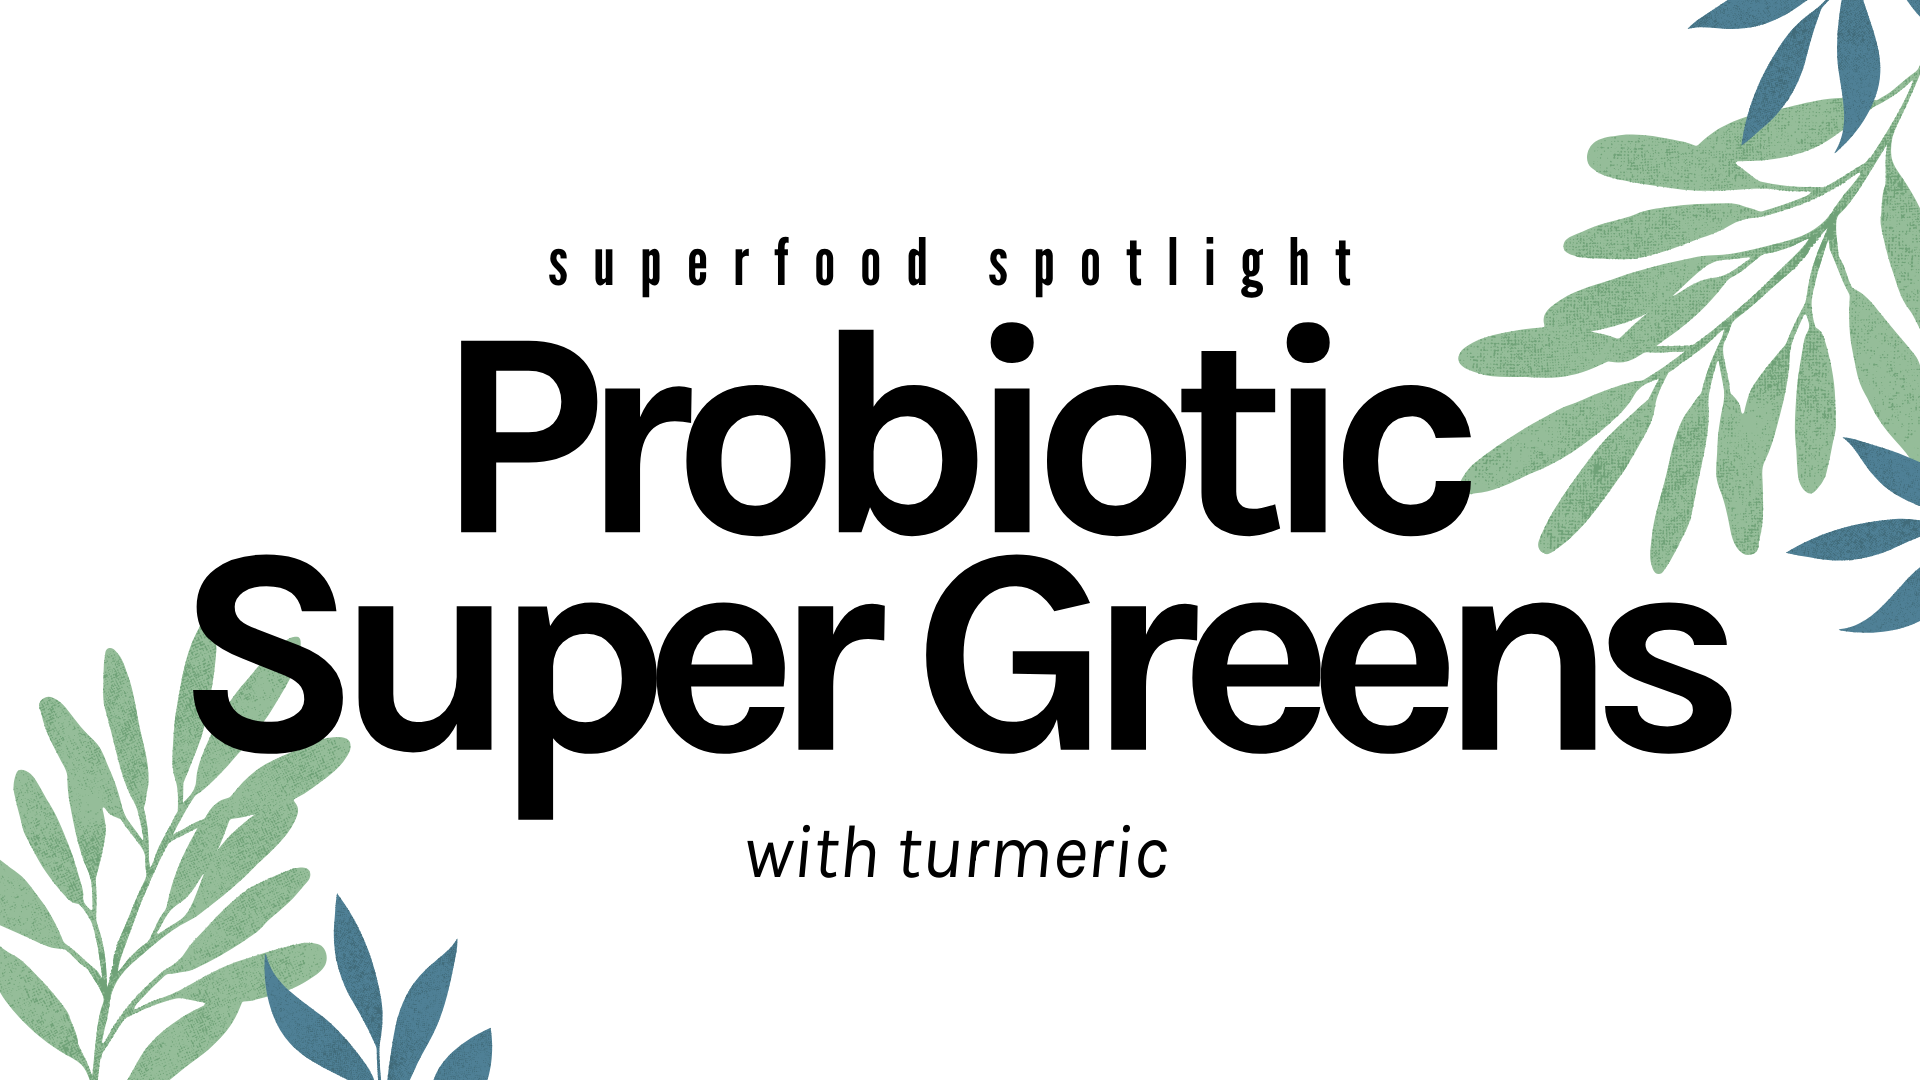 Superfood Spotlight: Probiotic Super Greens With Turmeric